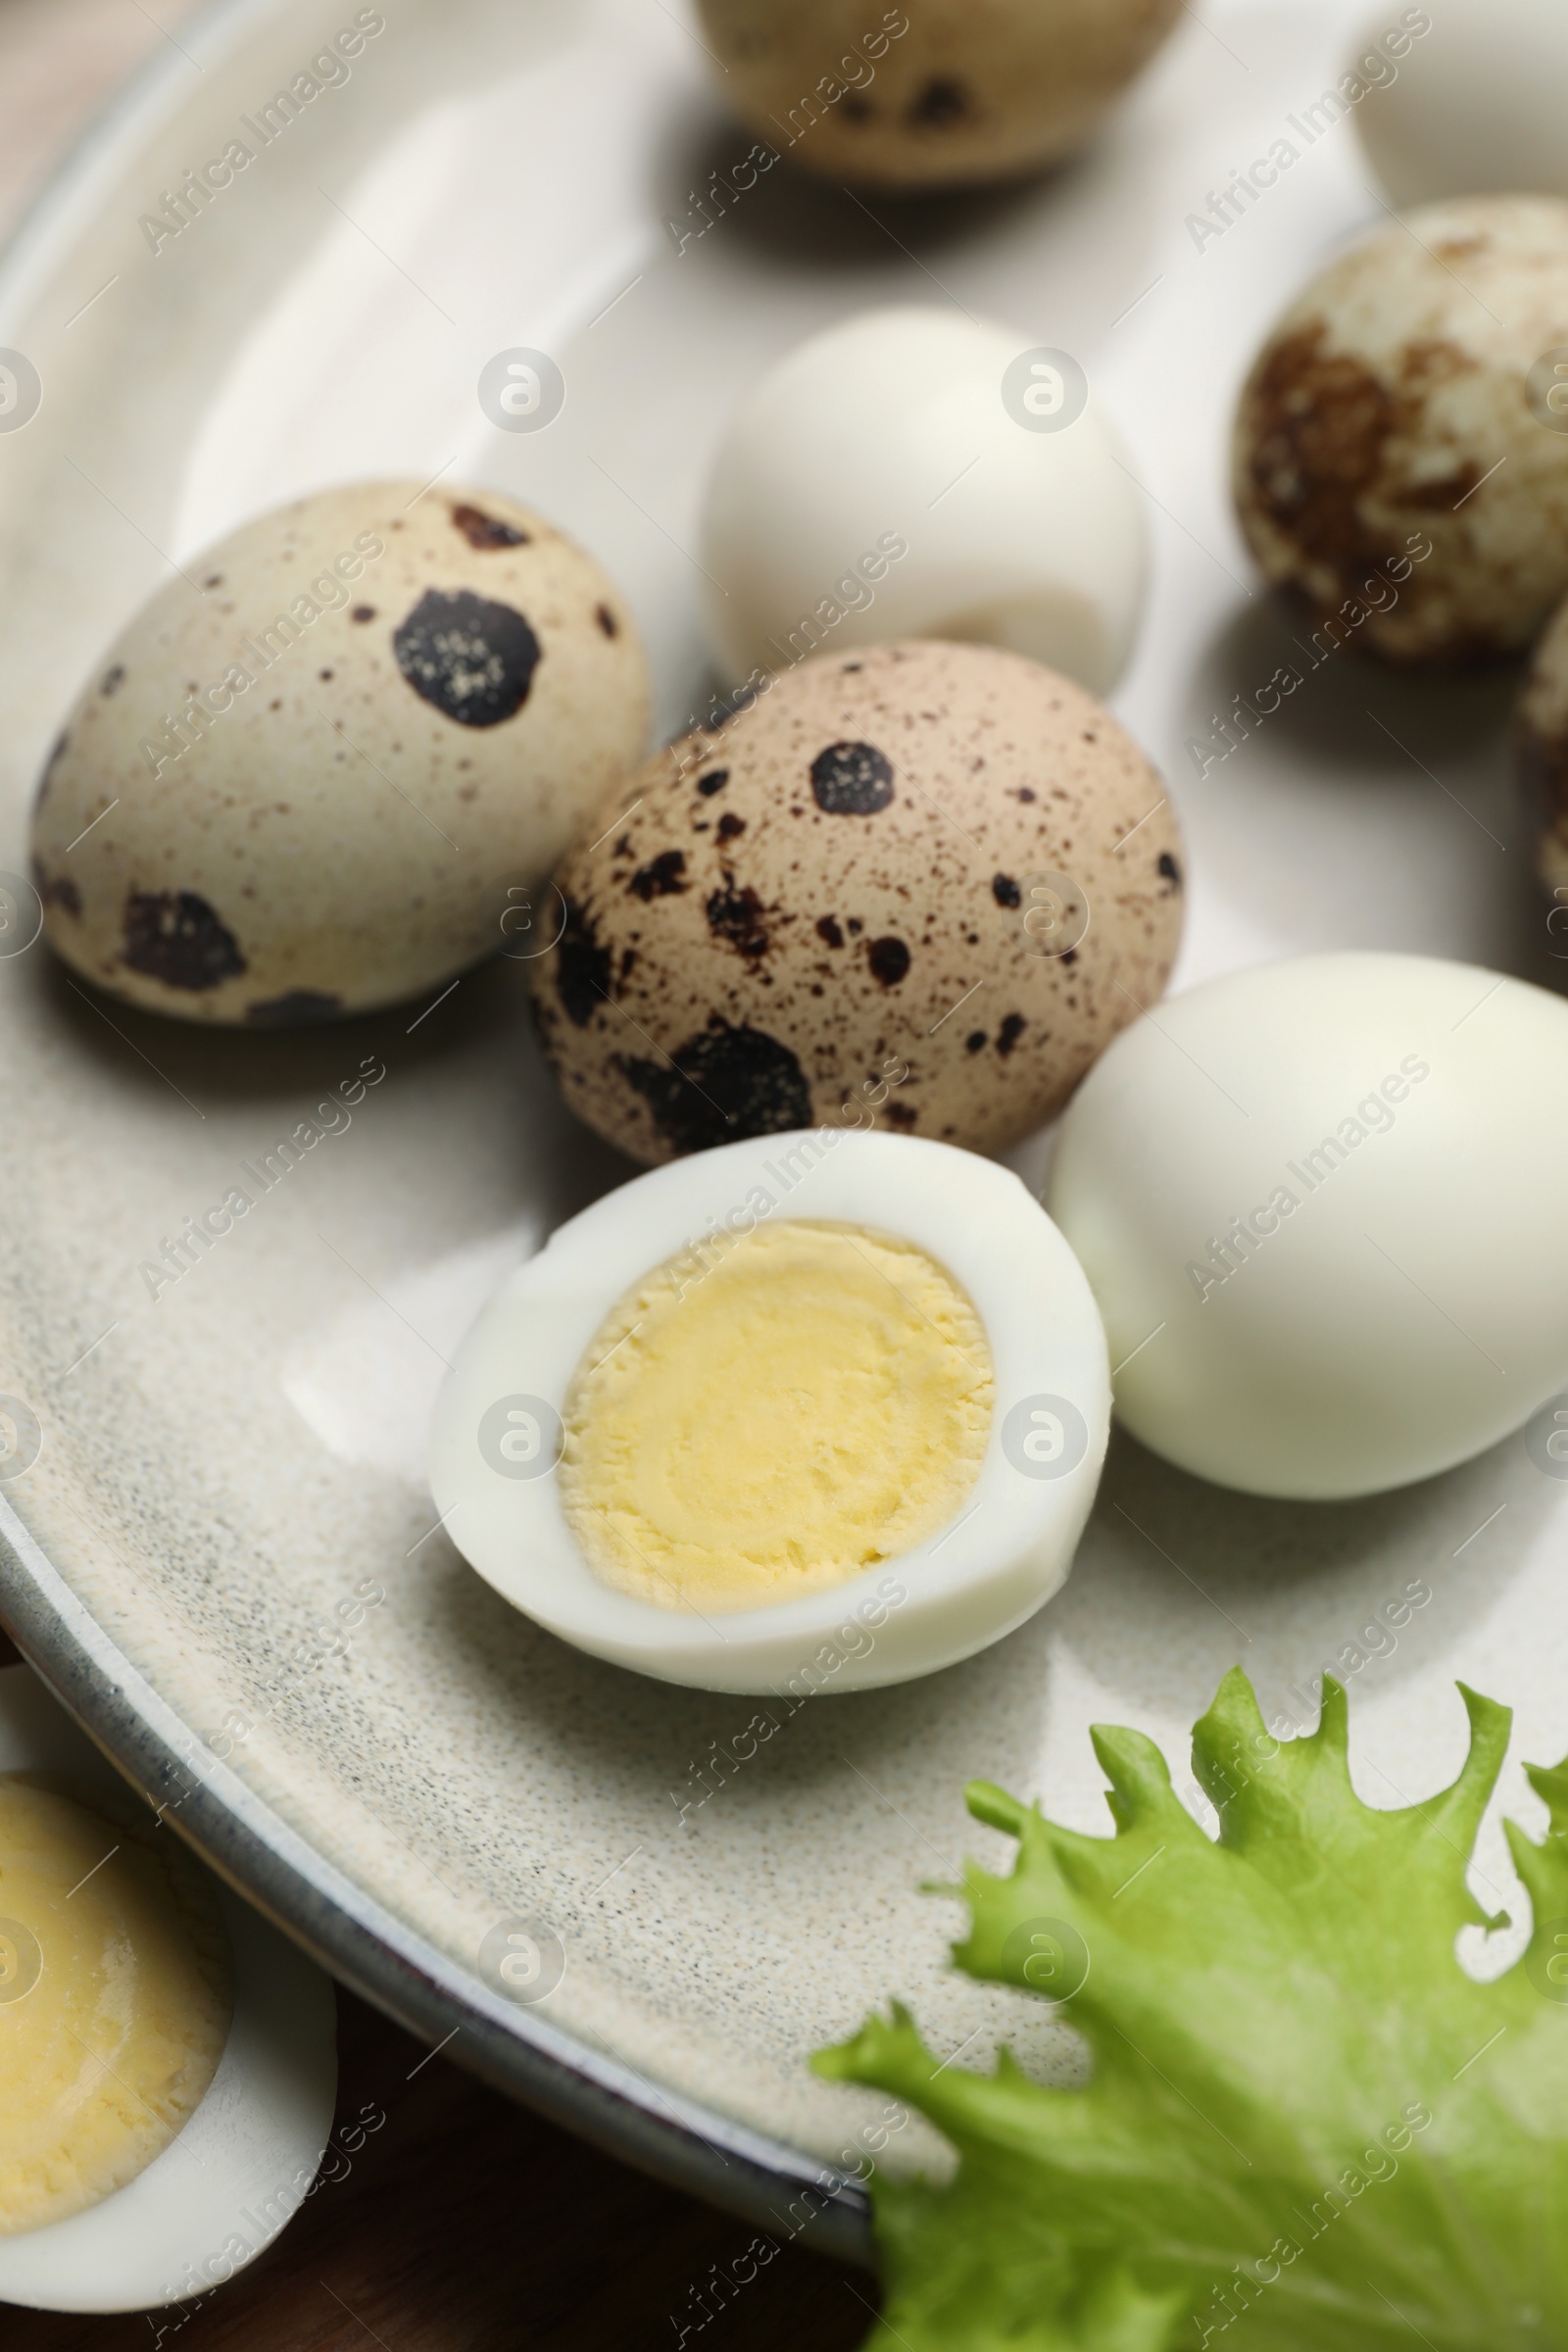 Photo of Unpeeled and peeled hard boiled quail eggs on plate, closeup